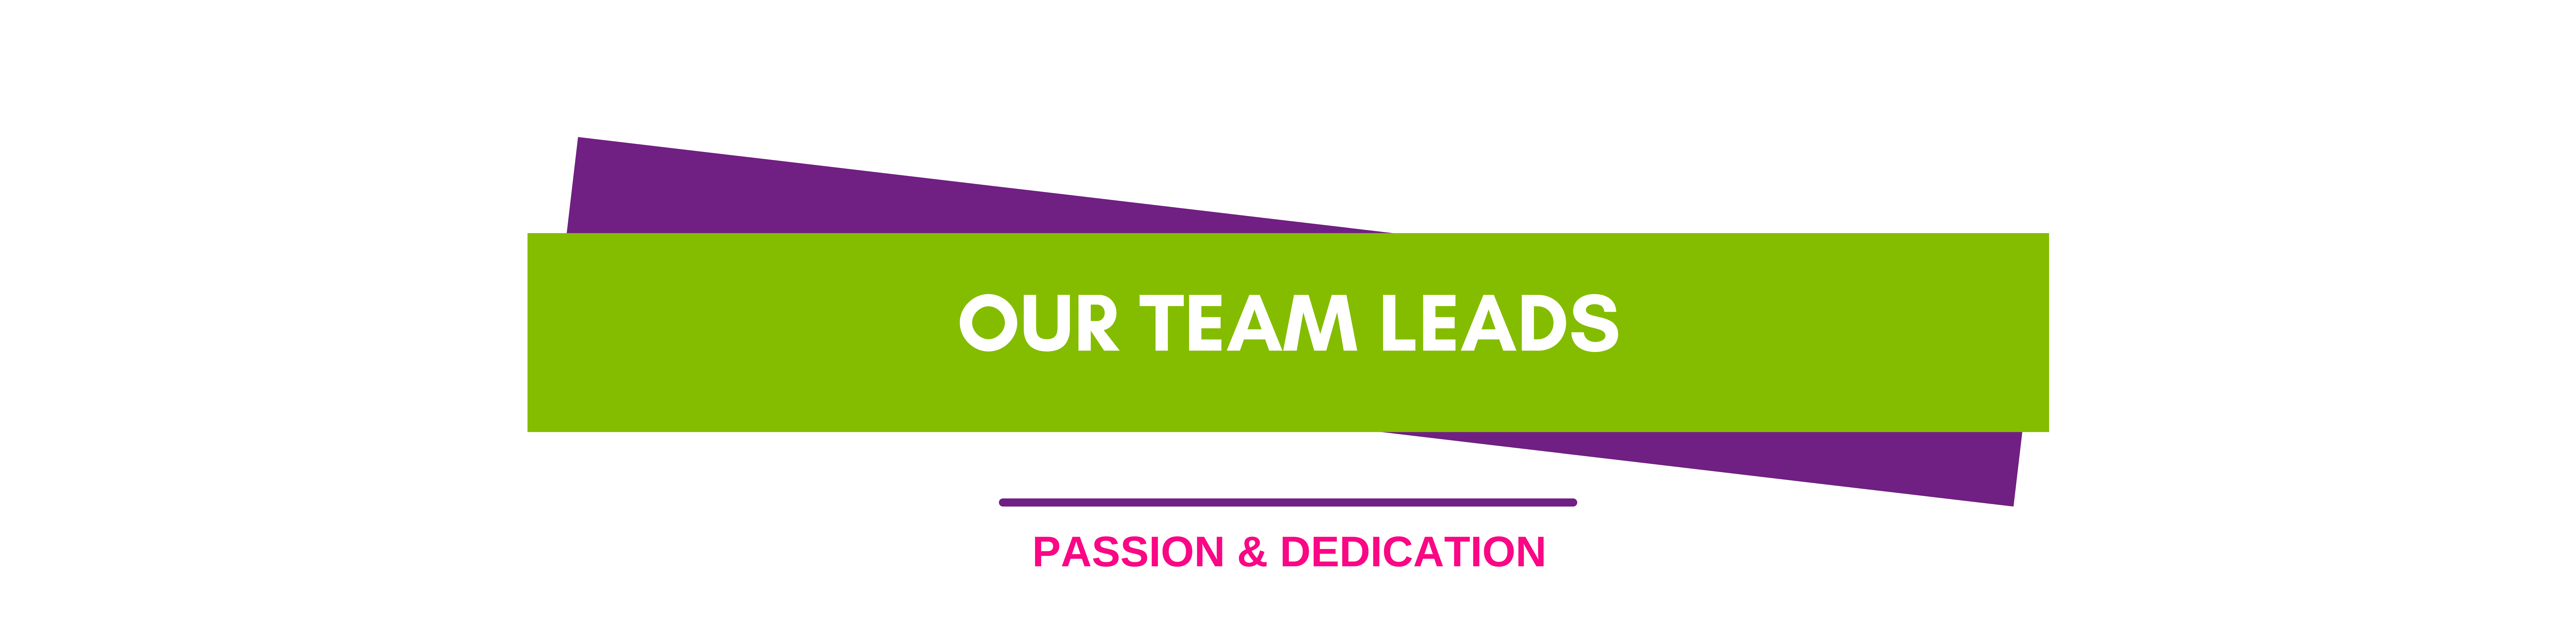 Dream-Team-Team-Leaders-Title-Banner-Assuaged